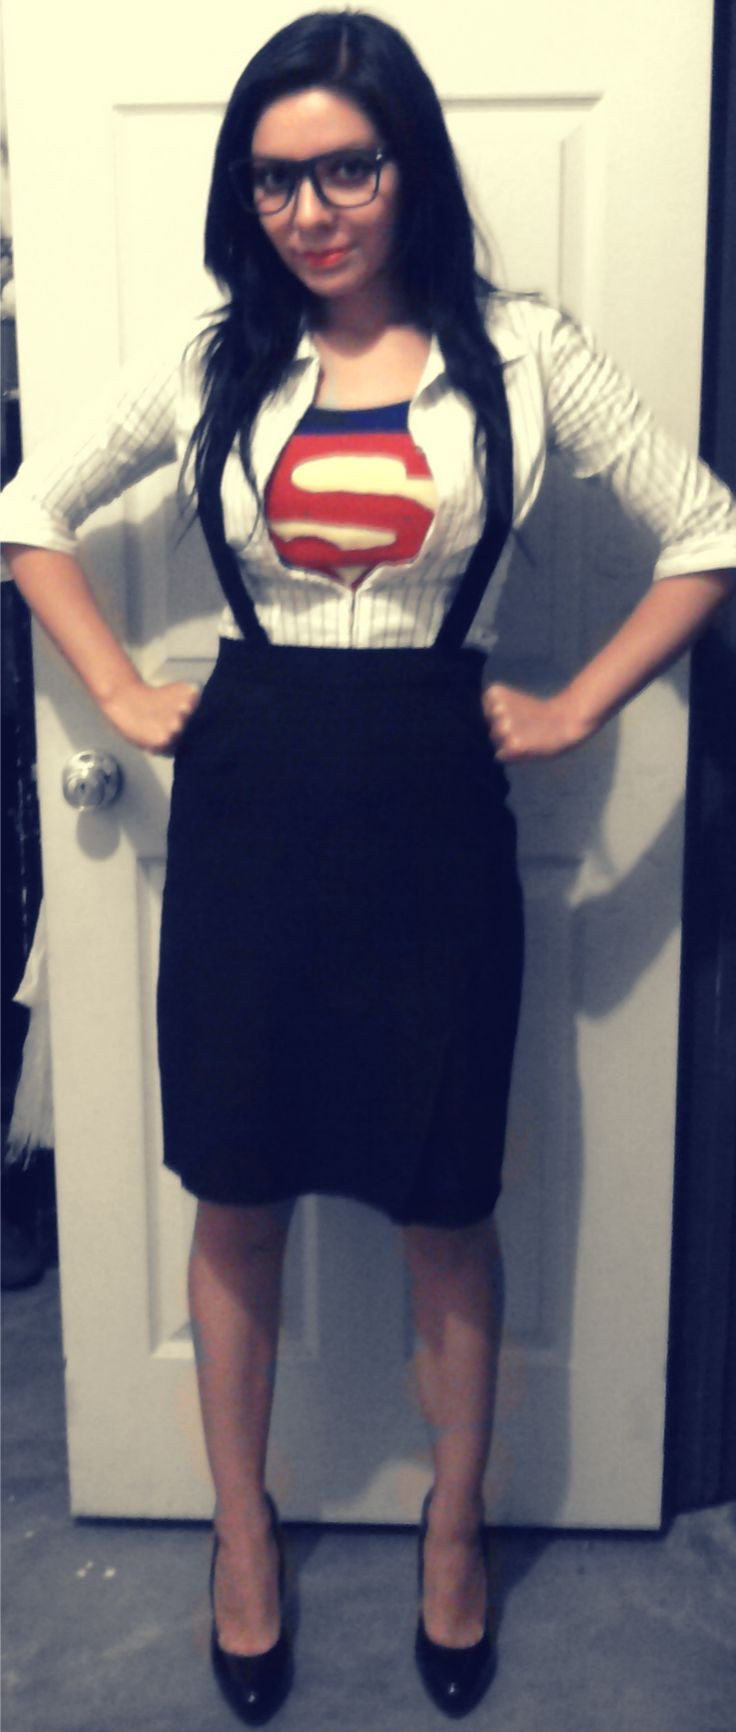 Best ideas about DIY Women Superhero Costumes
. Save or Pin Best 20 Superhero costumes women ideas on Pinterest Now.